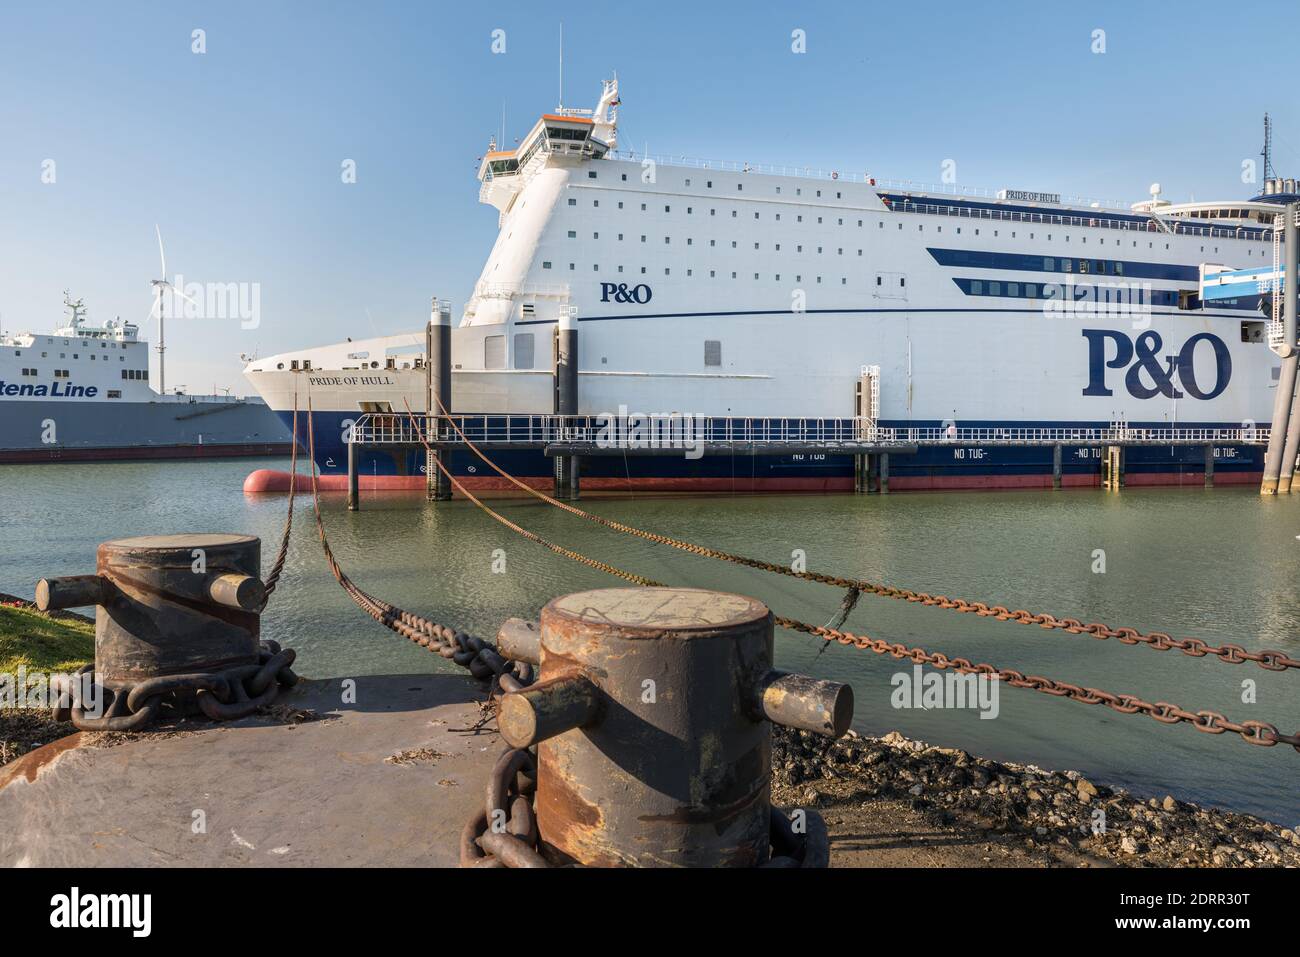 North sea ferry pride rotterdam -Fotos und -Bildmaterial in hoher Auflösung  – Alamy